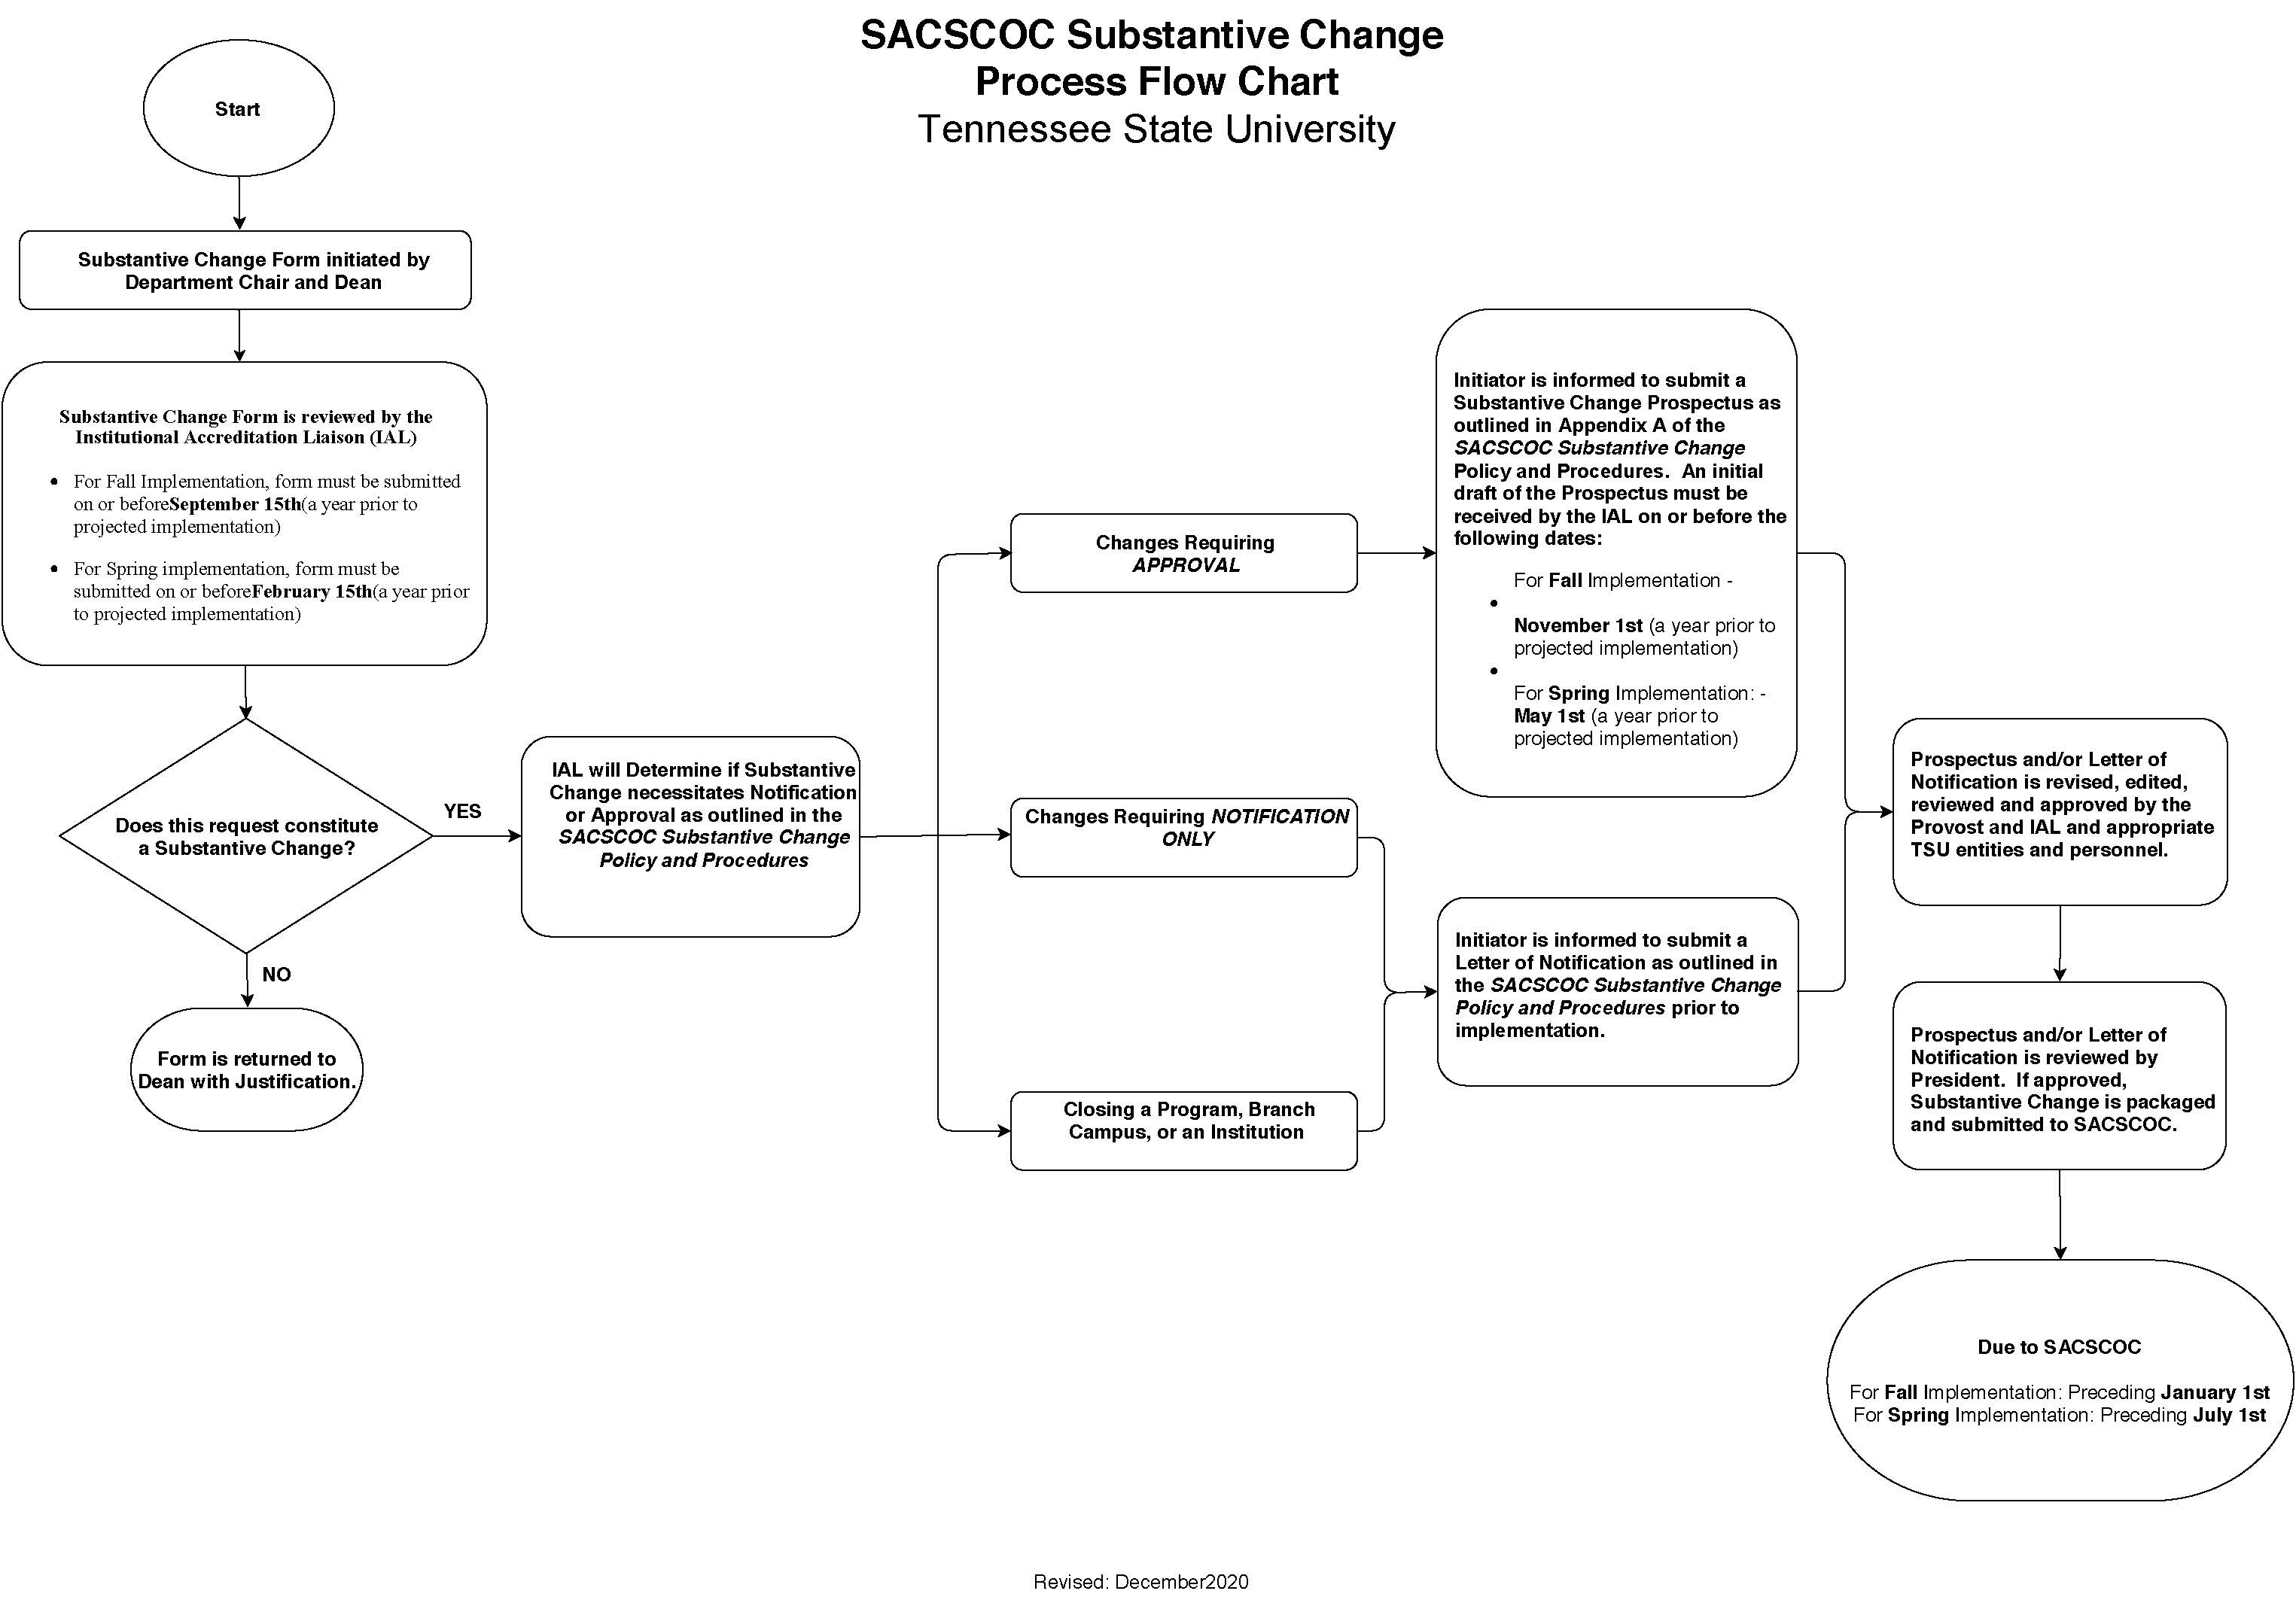 TSU Substantive Change Flow Chart